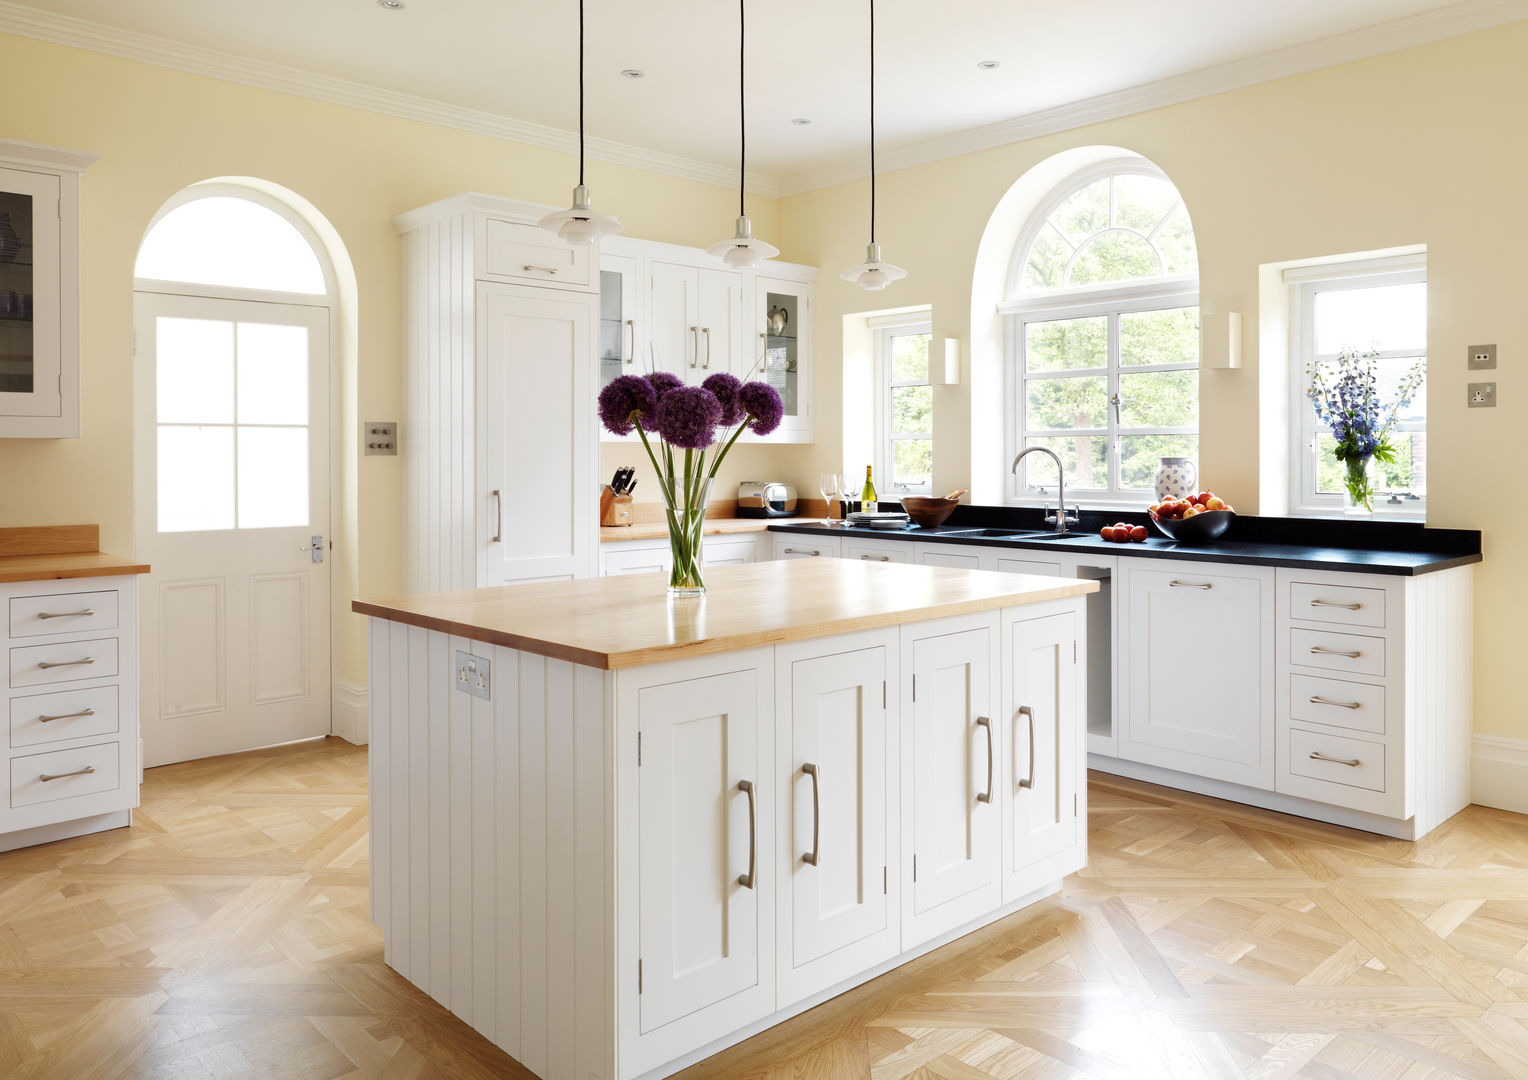 Painted Shaker kitchen by Harvey Jones Harvey Jones Kitchens Cocinas de estilo clásico